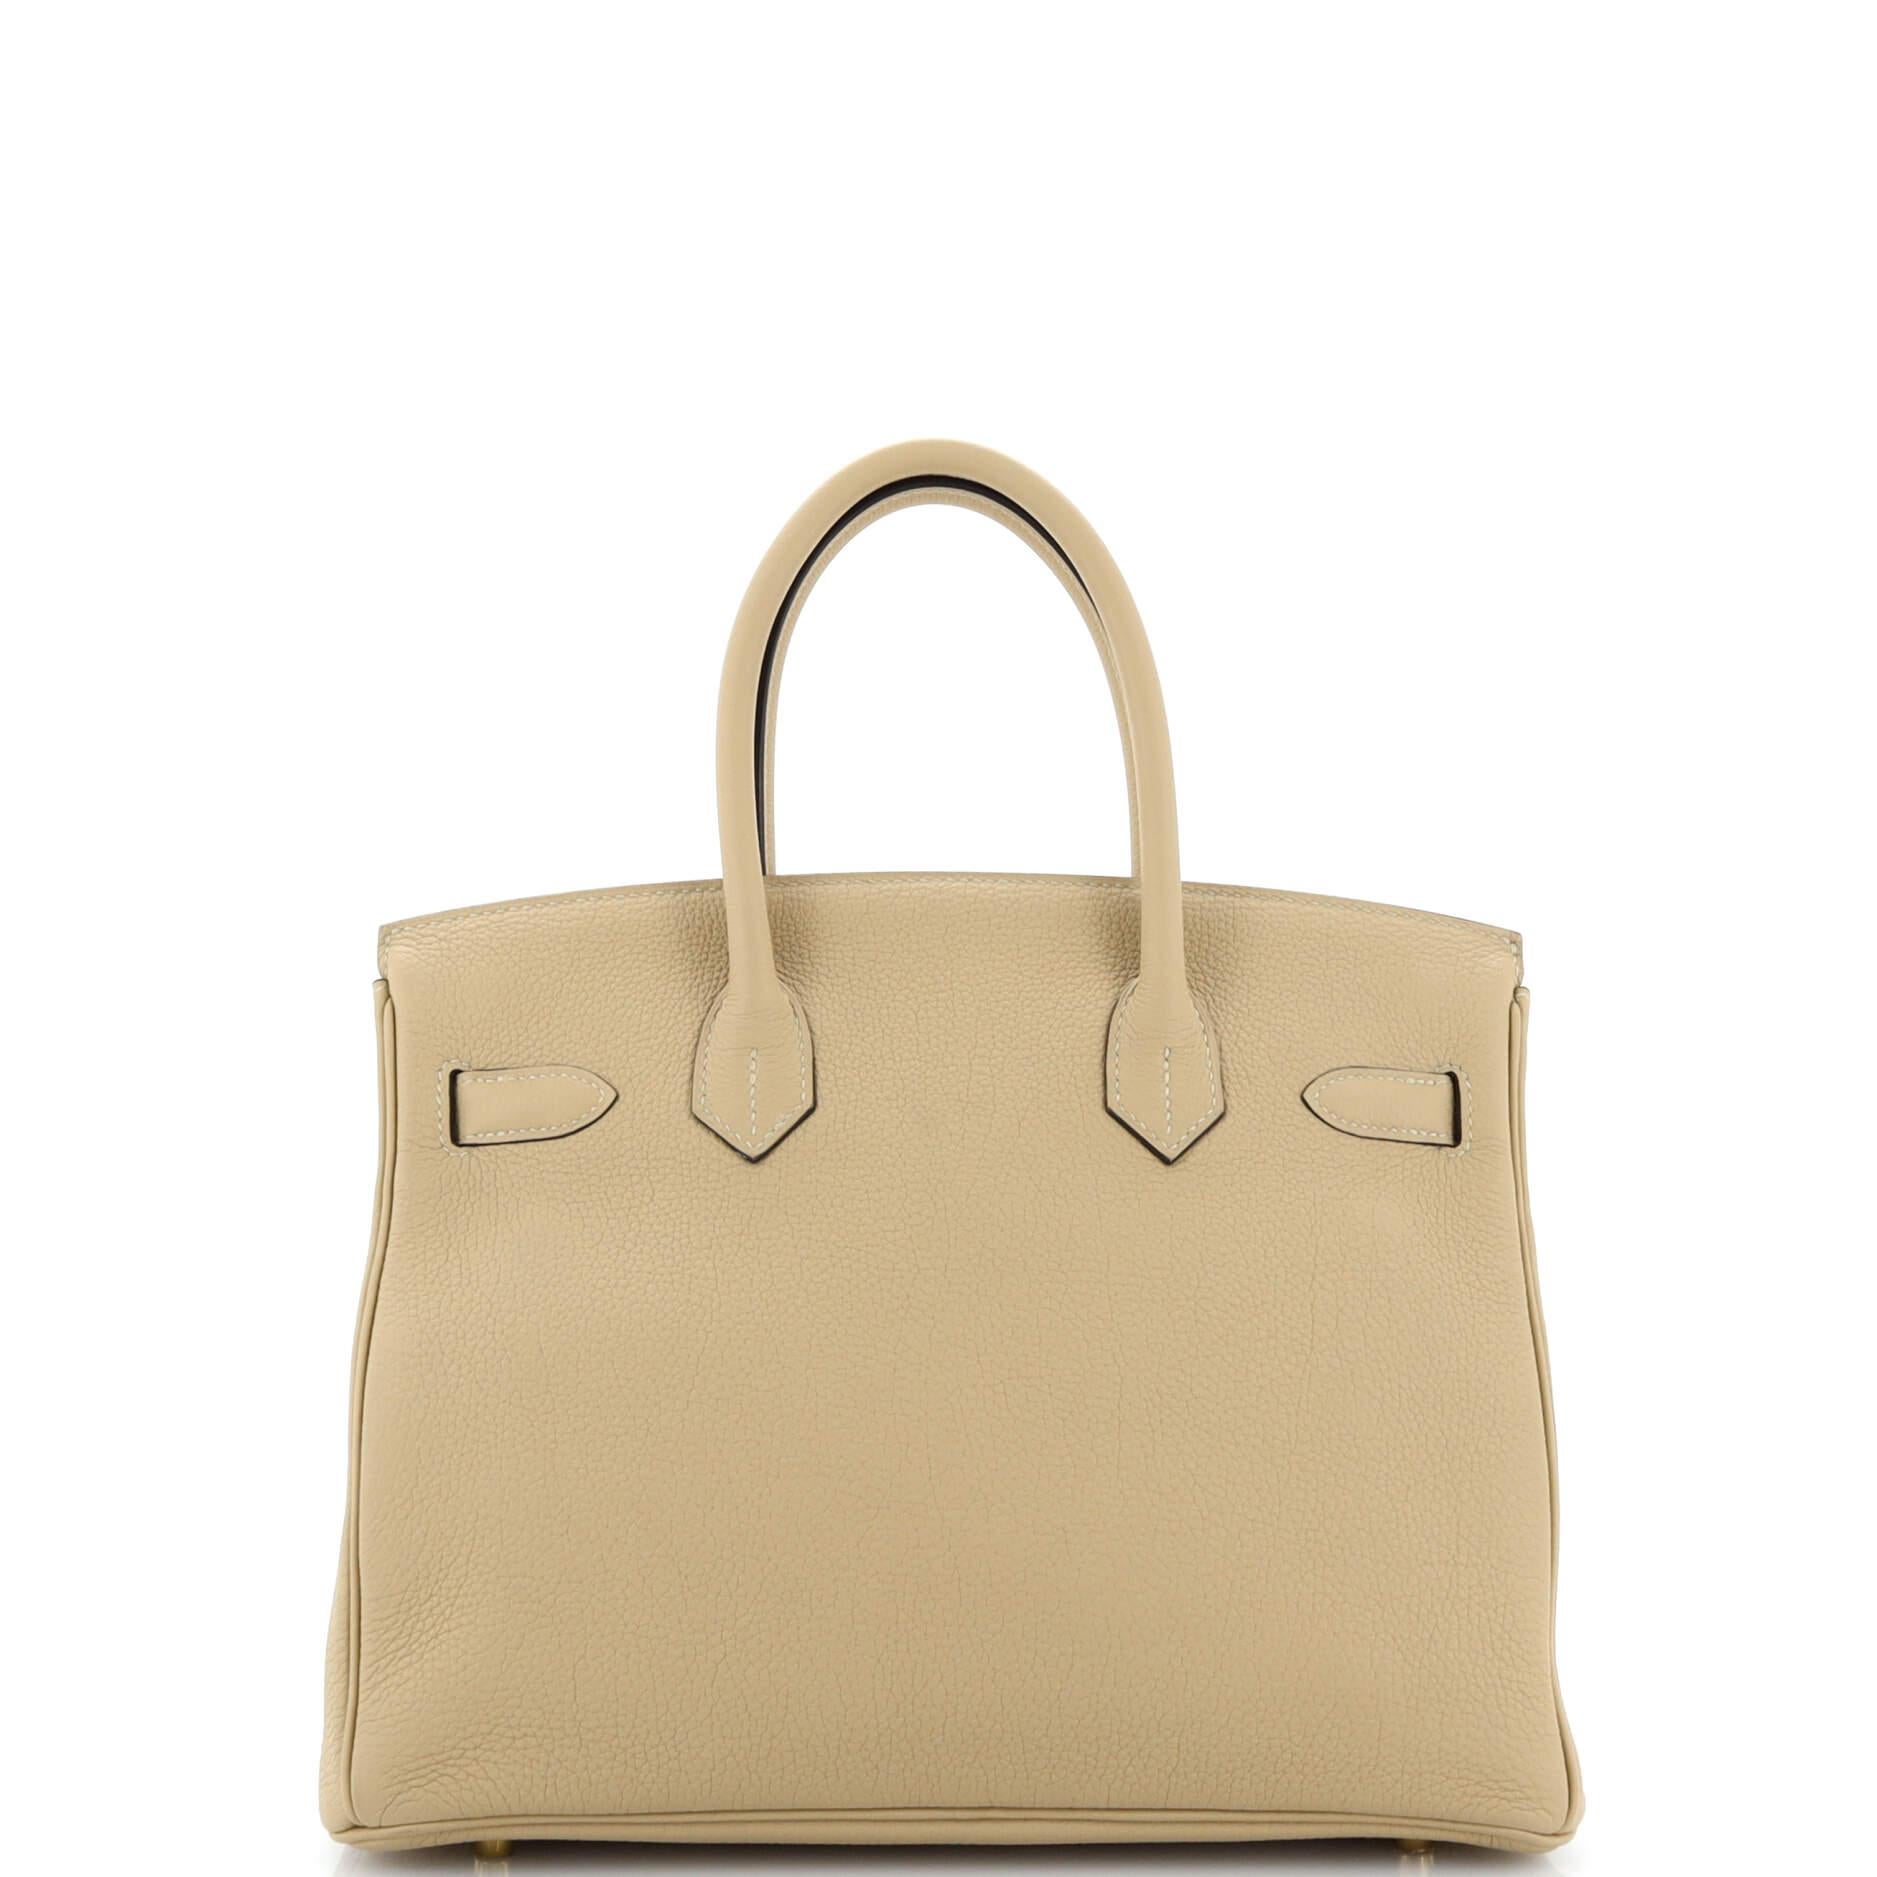 Women's or Men's Hermes Birkin Handbag Light Togo with Gold Hardware 30